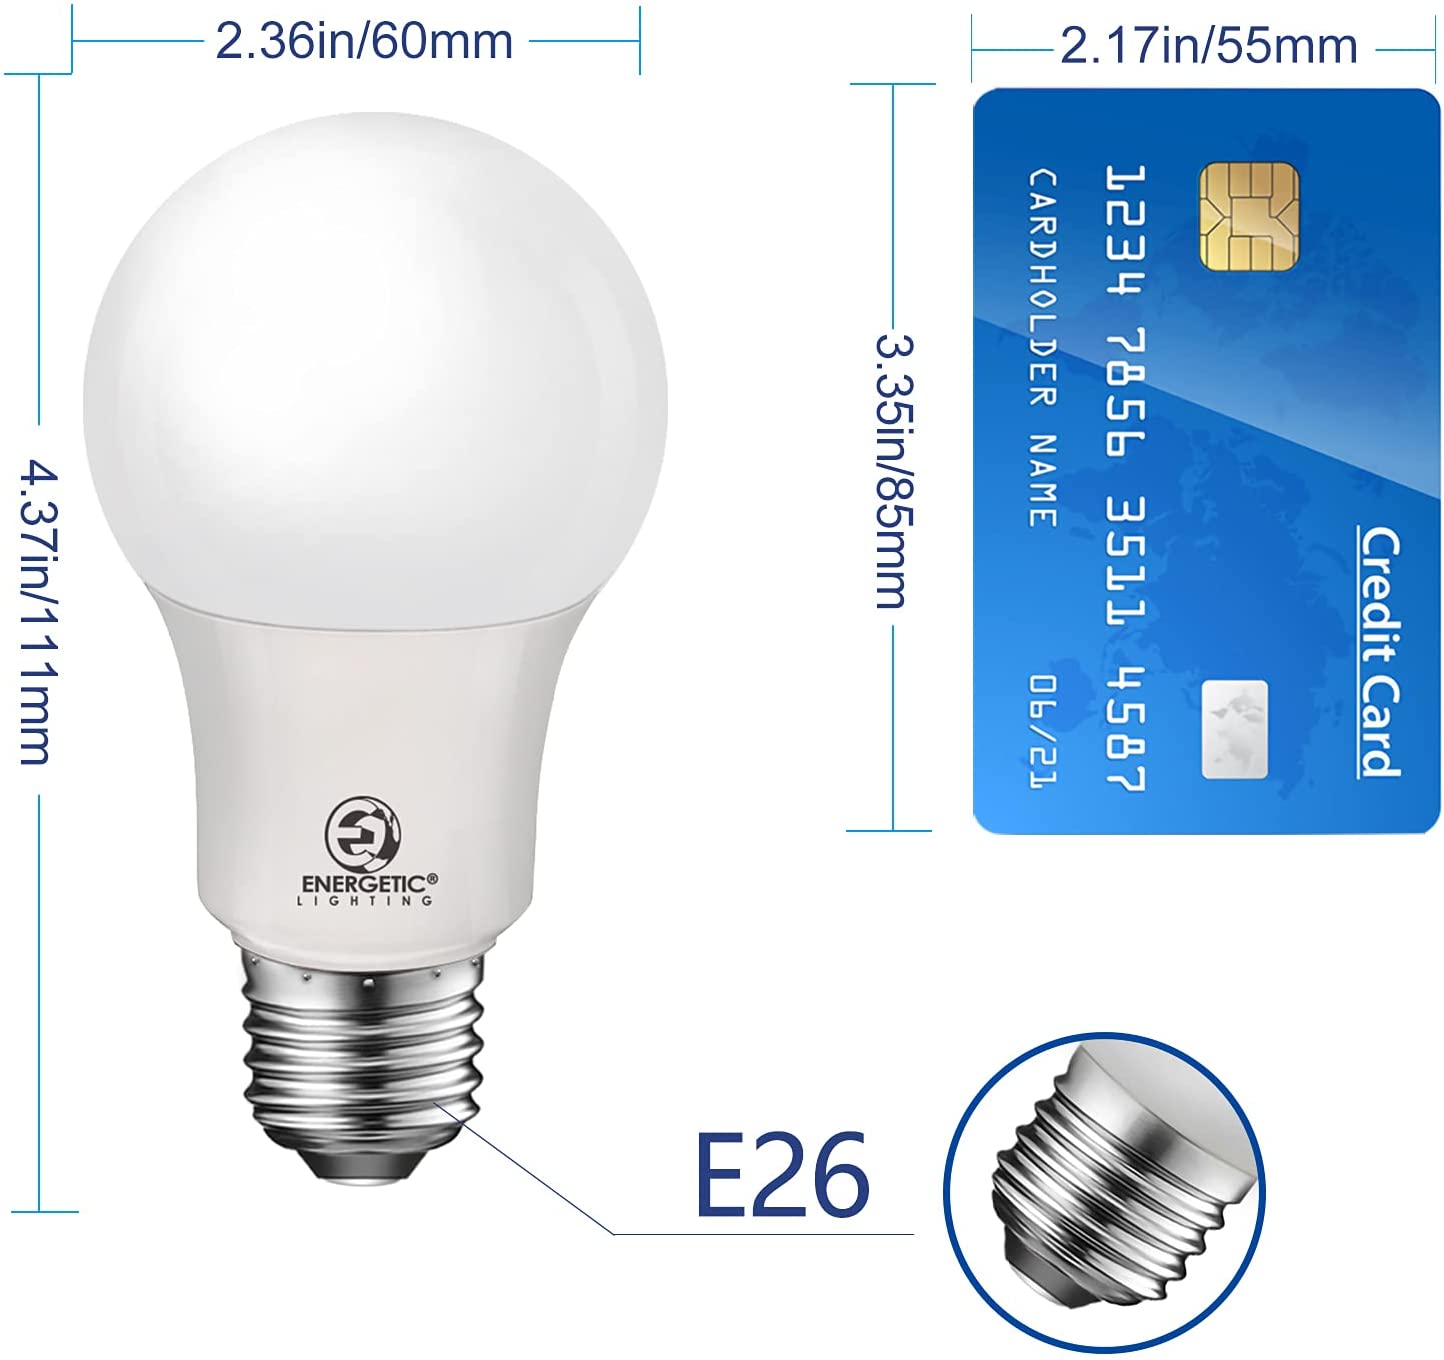 40W Equivalent A19 LED Light Bulb, Soft White 2700K, UL Listed, E26 Standard Base, Non-Dimmable LED Light Bulb, 4 Pack, Energetic